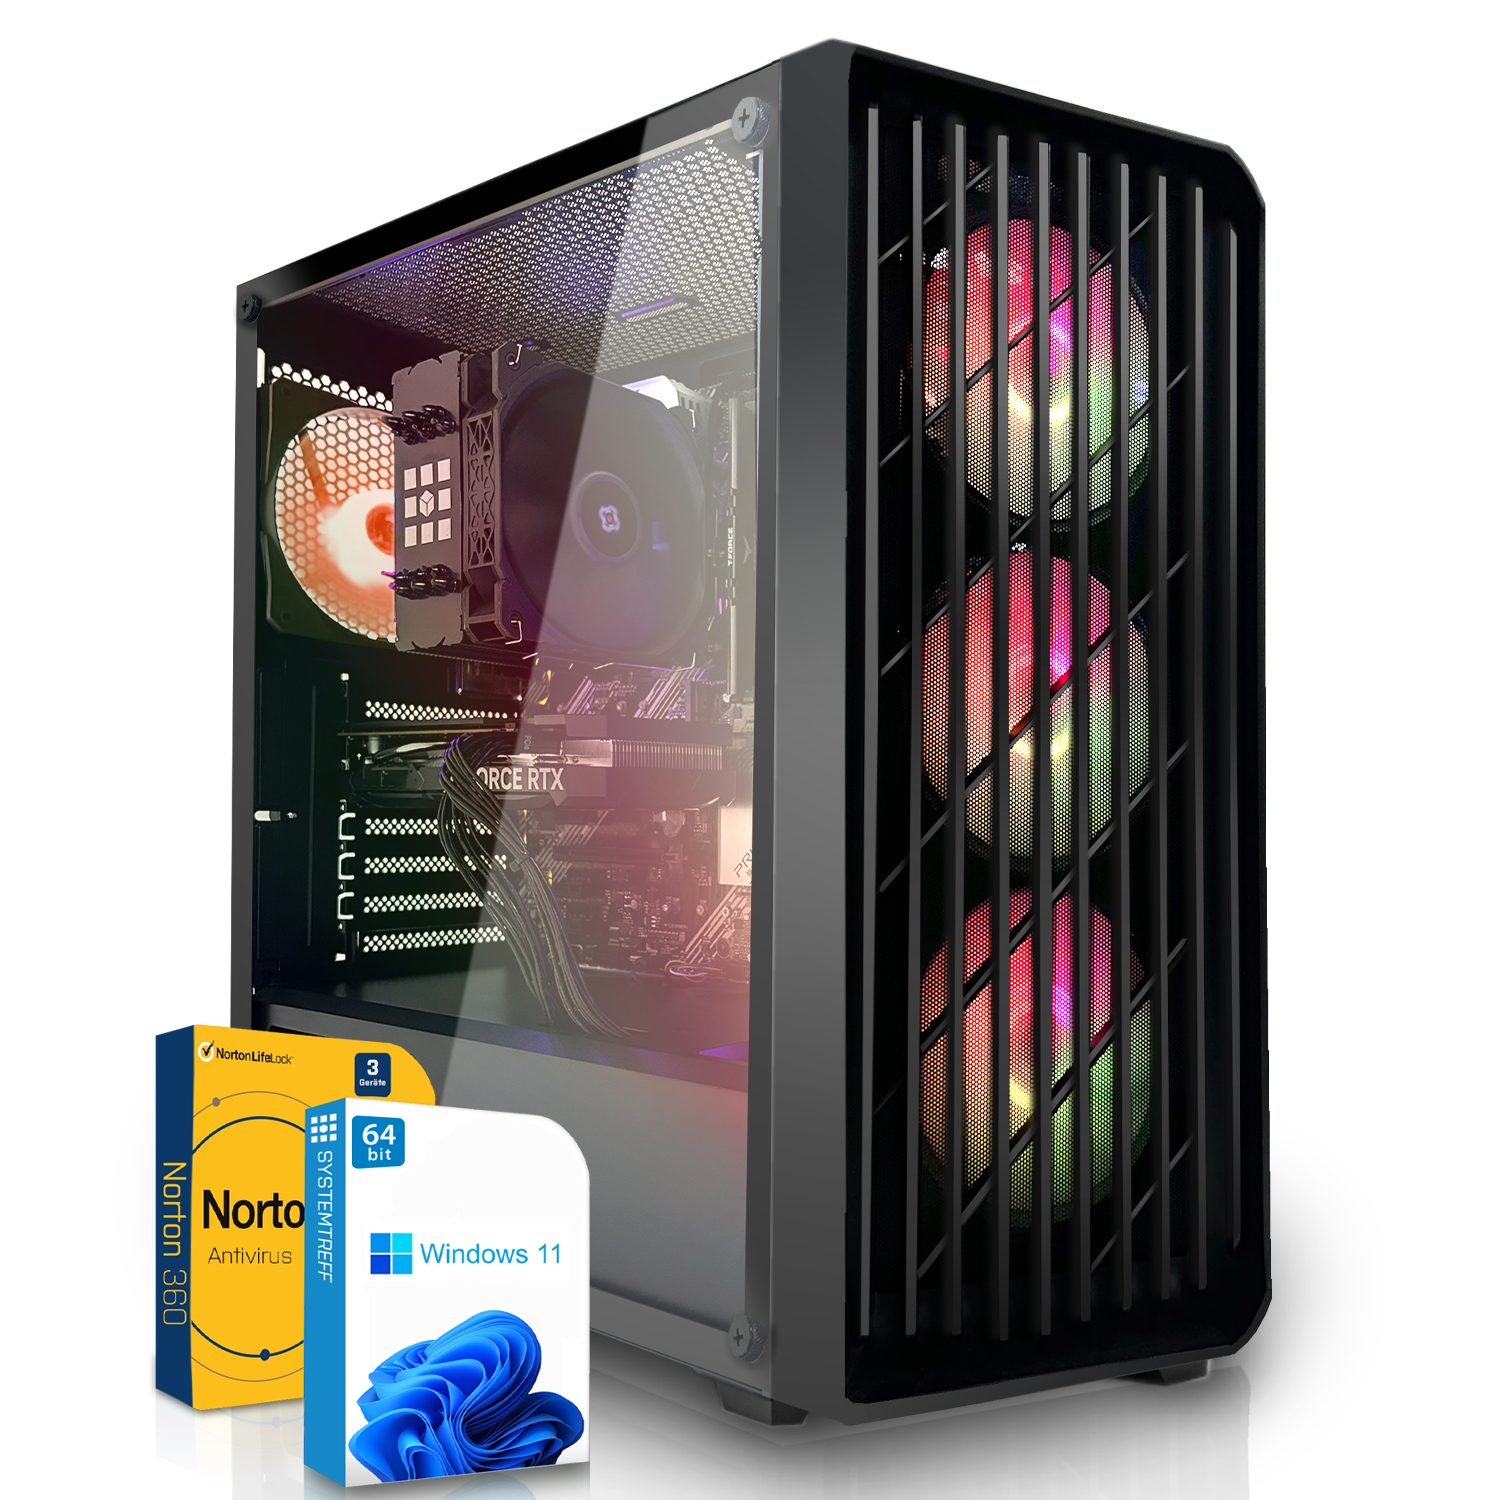 SYSTEMTREFF Pro GB mit GeForce Gaming 16 Intel Core 11 mSSD, i5 Intel® i5-13600K, Pro, PC RTX™ Gaming Windows 4060 Prozessor, 1000 Core™ GB NVIDIA RAM, Ti